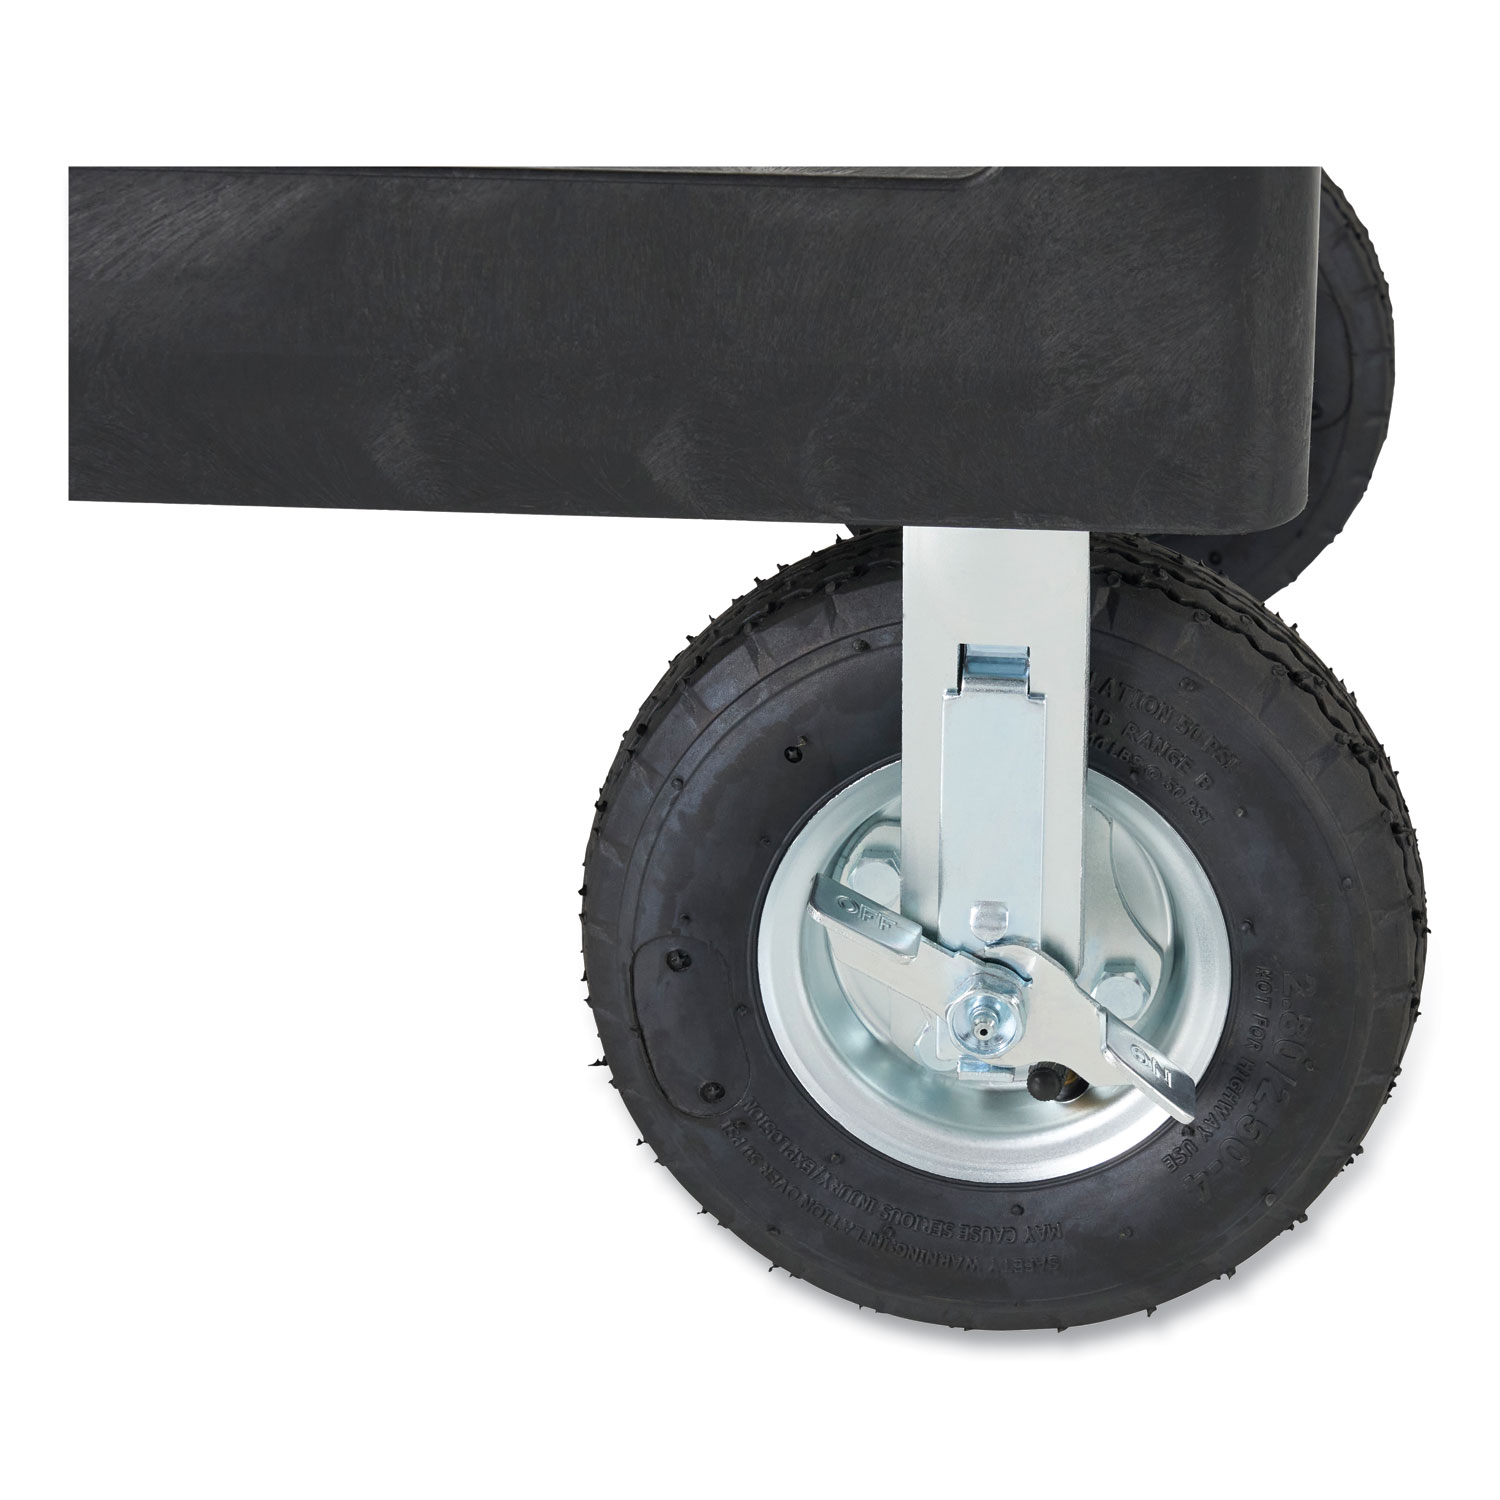 Rubbermaid Black Plastic 2-Shelf Lipped Top Heavy-Duty Utility Cart with  Pneumatic Casters - 54L x 25 1/4W x 43 1/8H